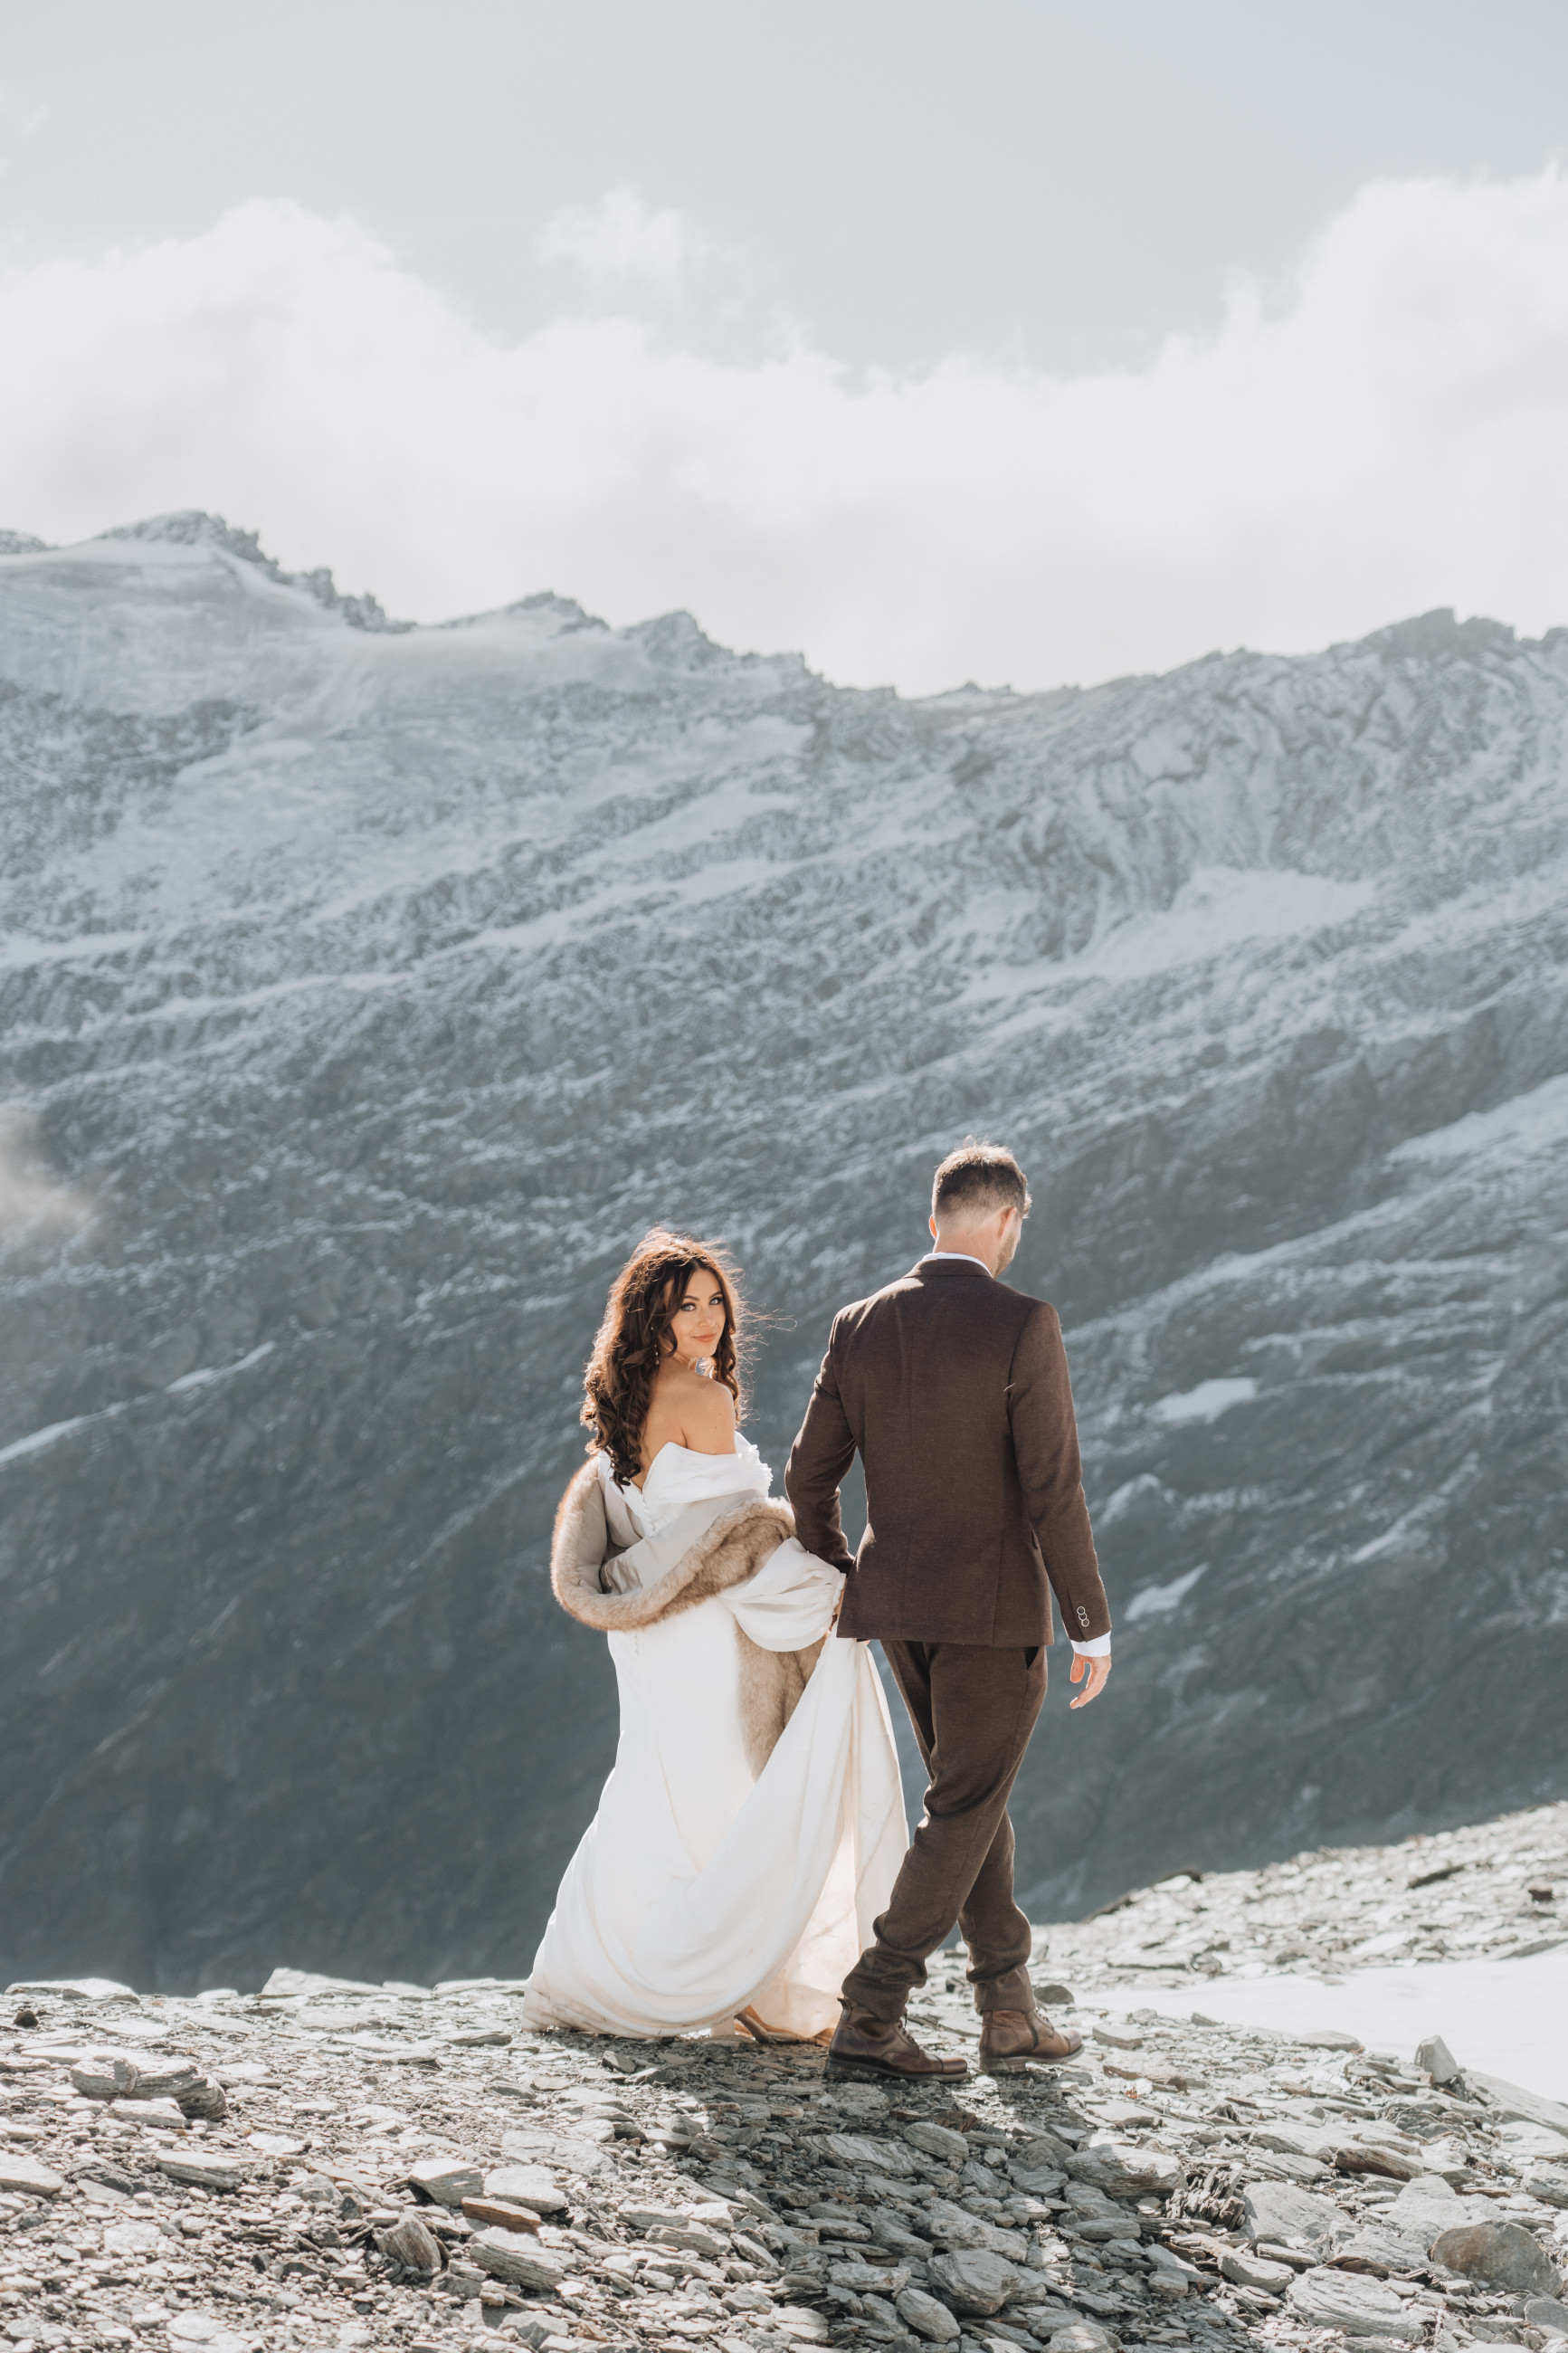 A&J's mountain wedding photoshop on Black Peak in Wanaka